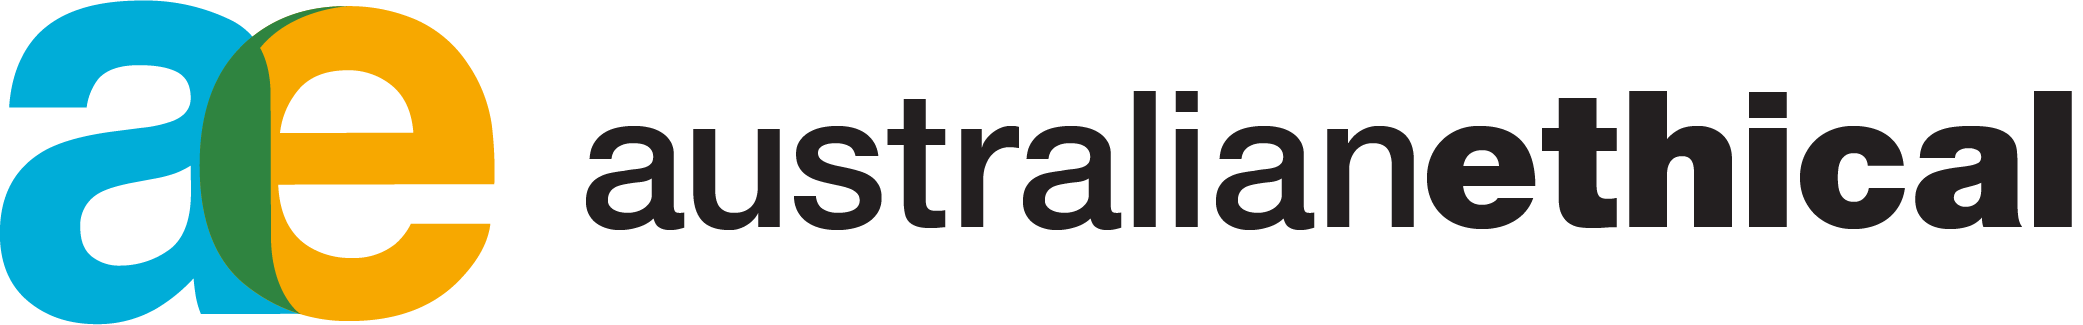 Australian Ethical Investment Limited Logo